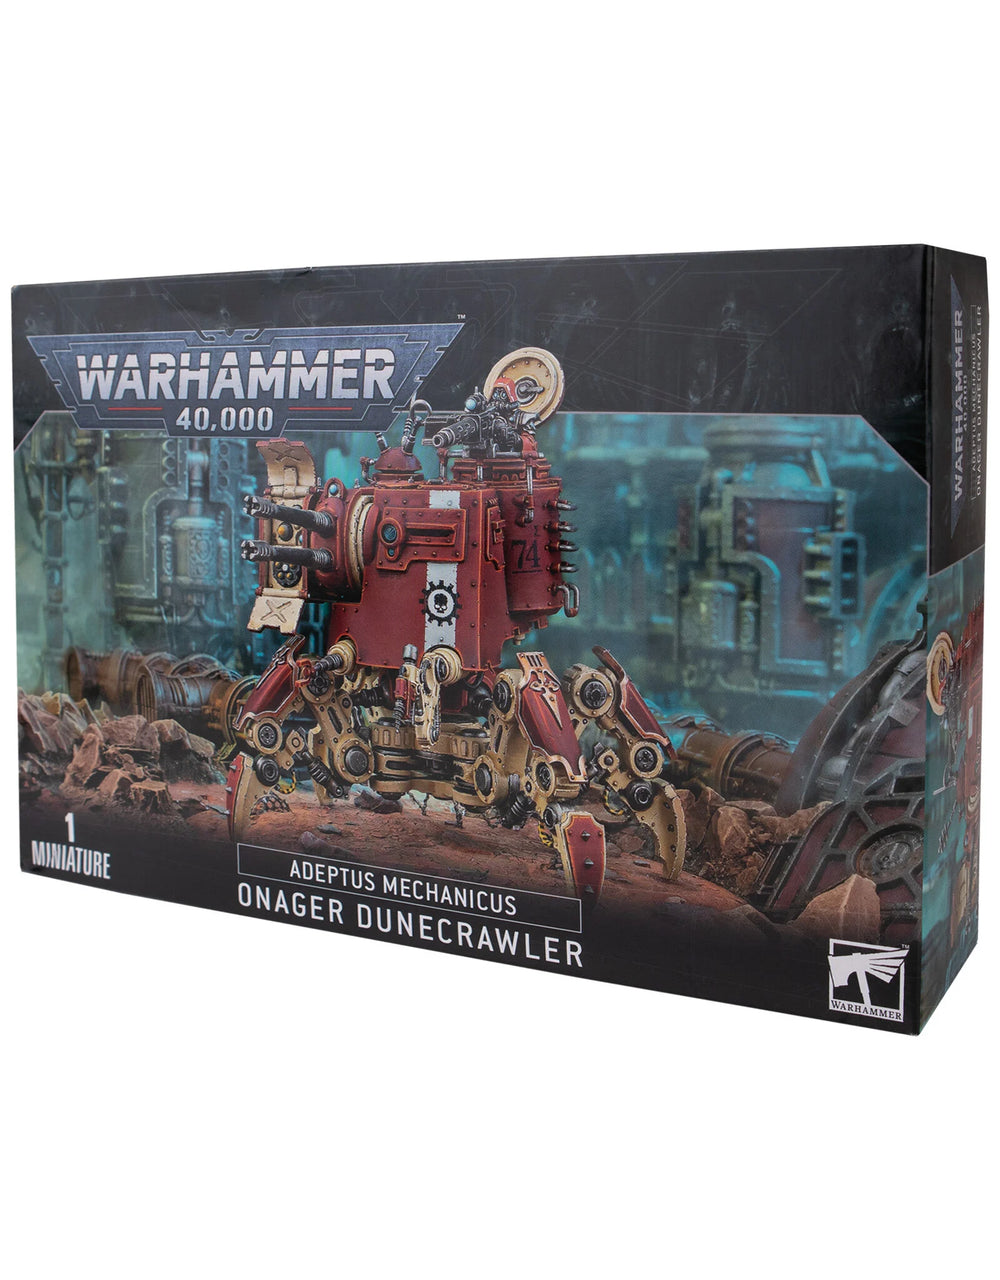 ADEPTUS MECHANICUS: ONAGER DUNECRAWLER Games Workshop Warhammer 40000